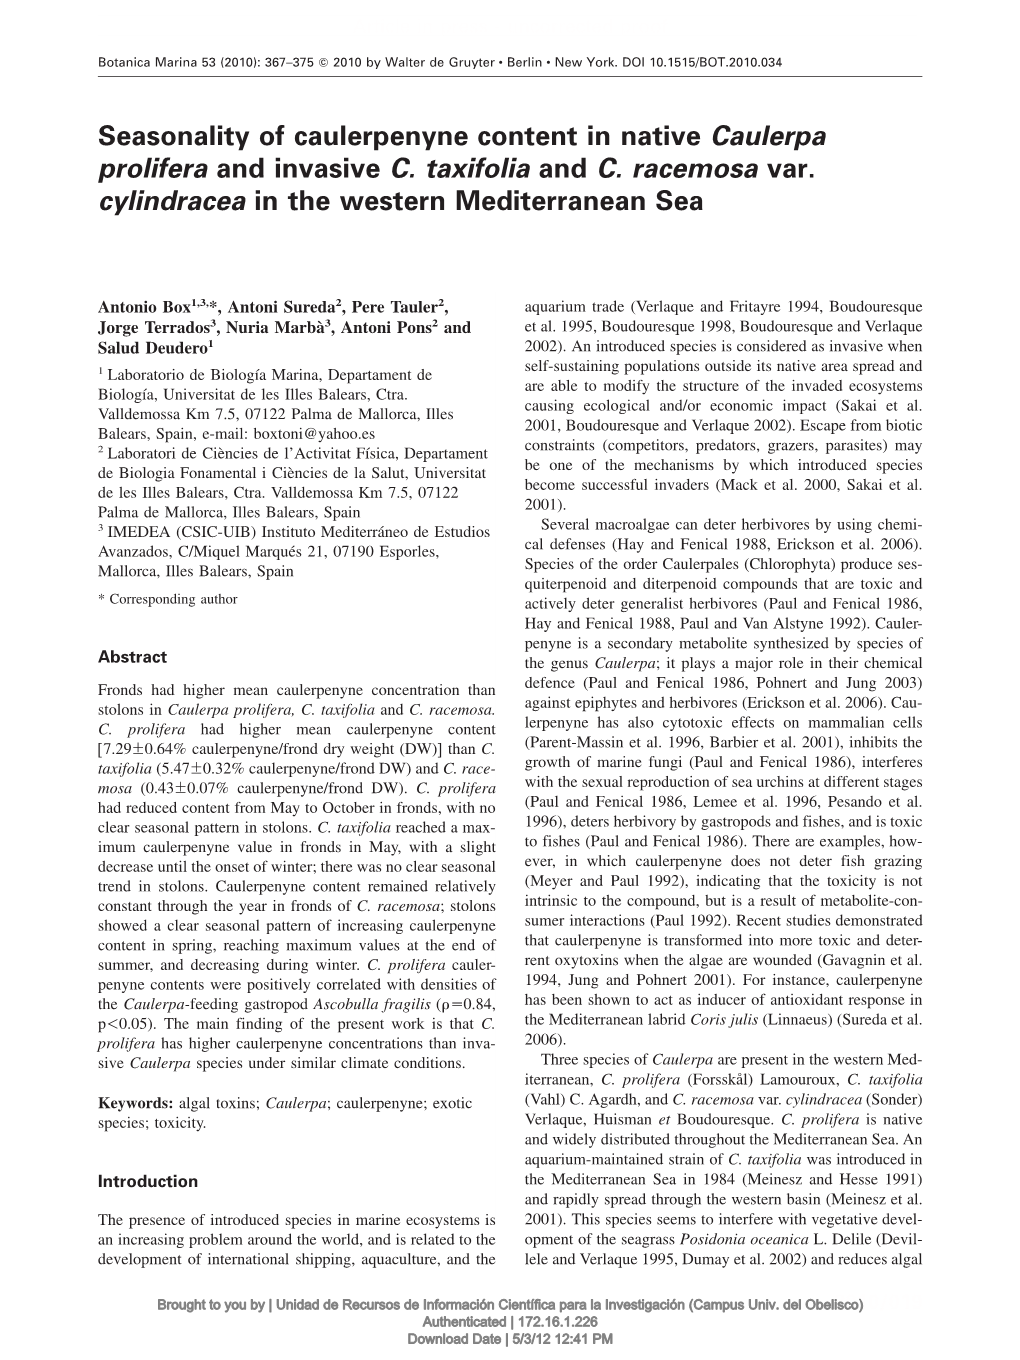 Seasonality of Caulerpenyne Content in Native Caulerpa Prolifera and Invasive C